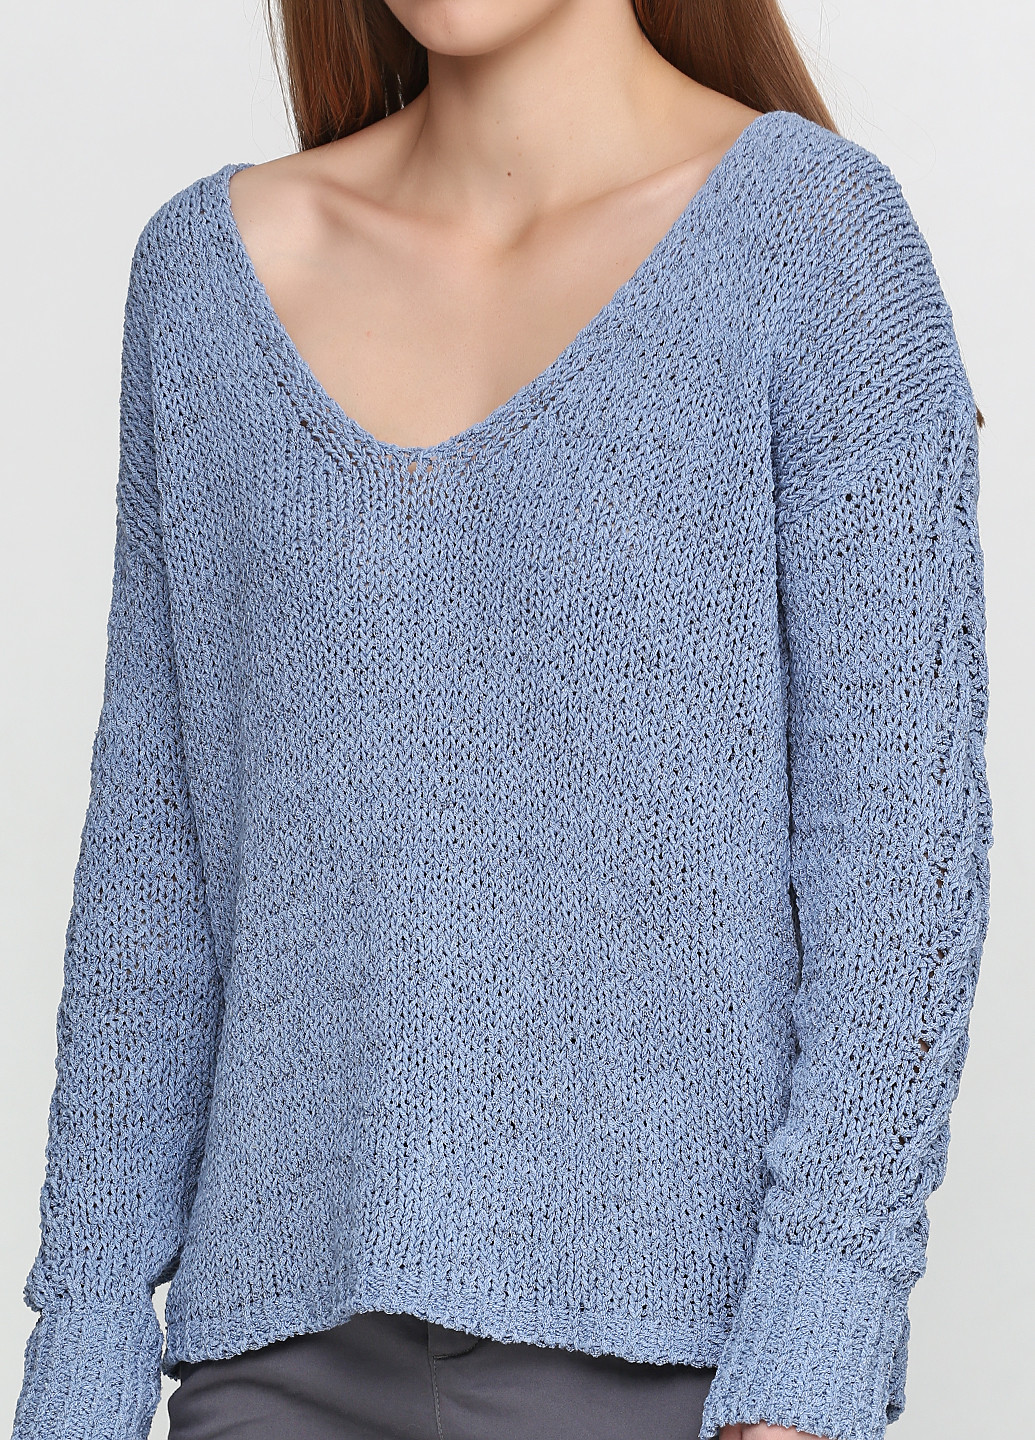 Бледно-синий демисезонный пуловер пуловер United Colors of Benetton